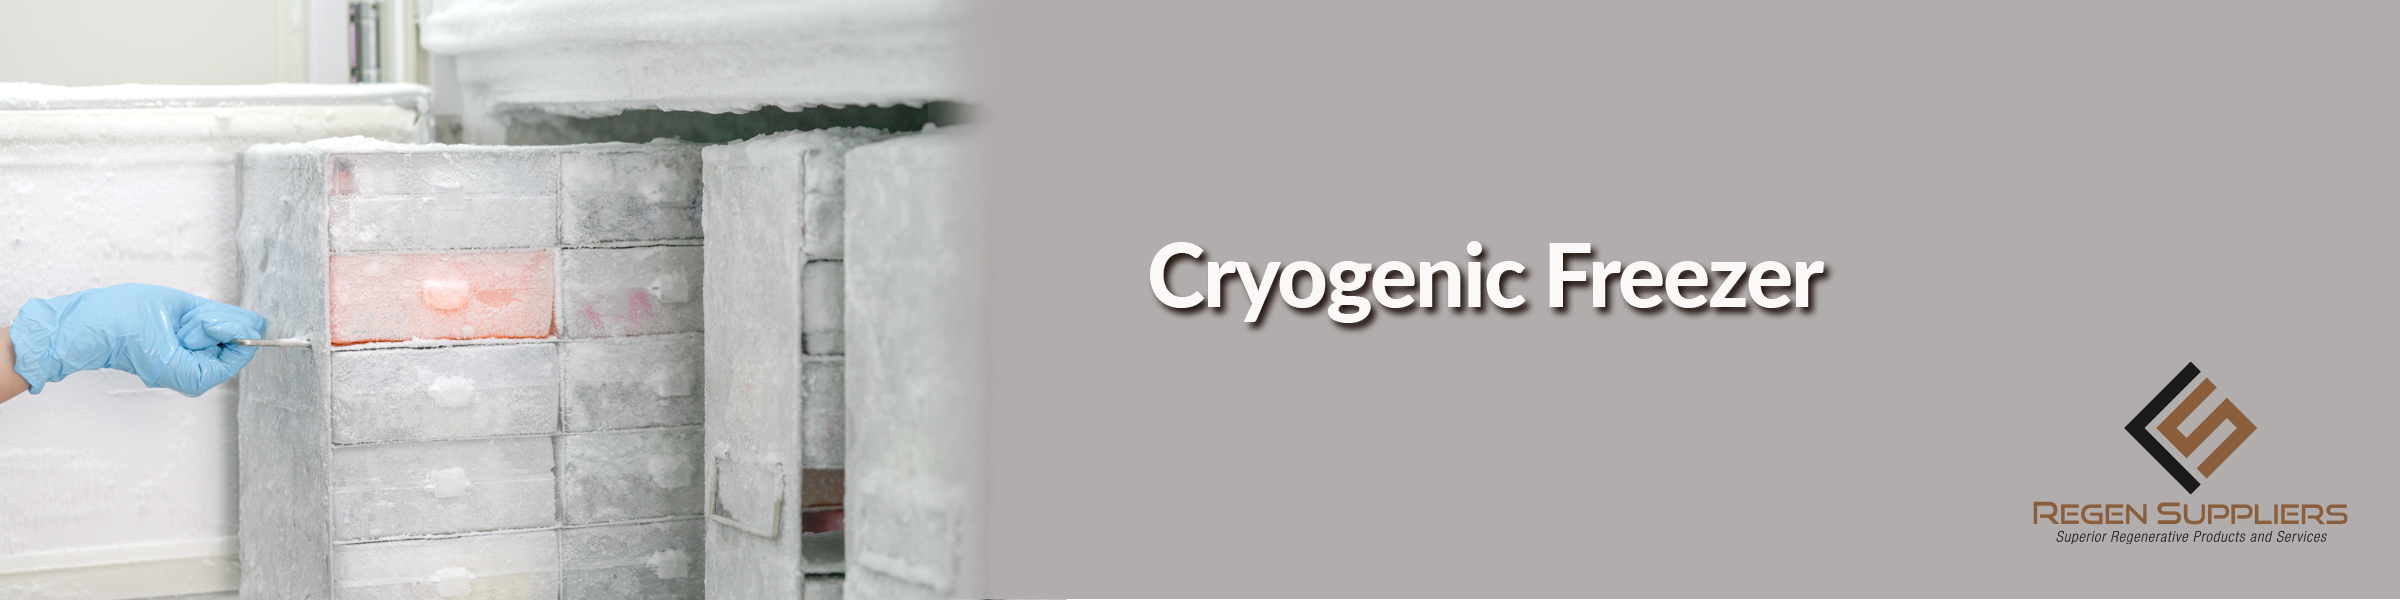 Cryogenic Freezer